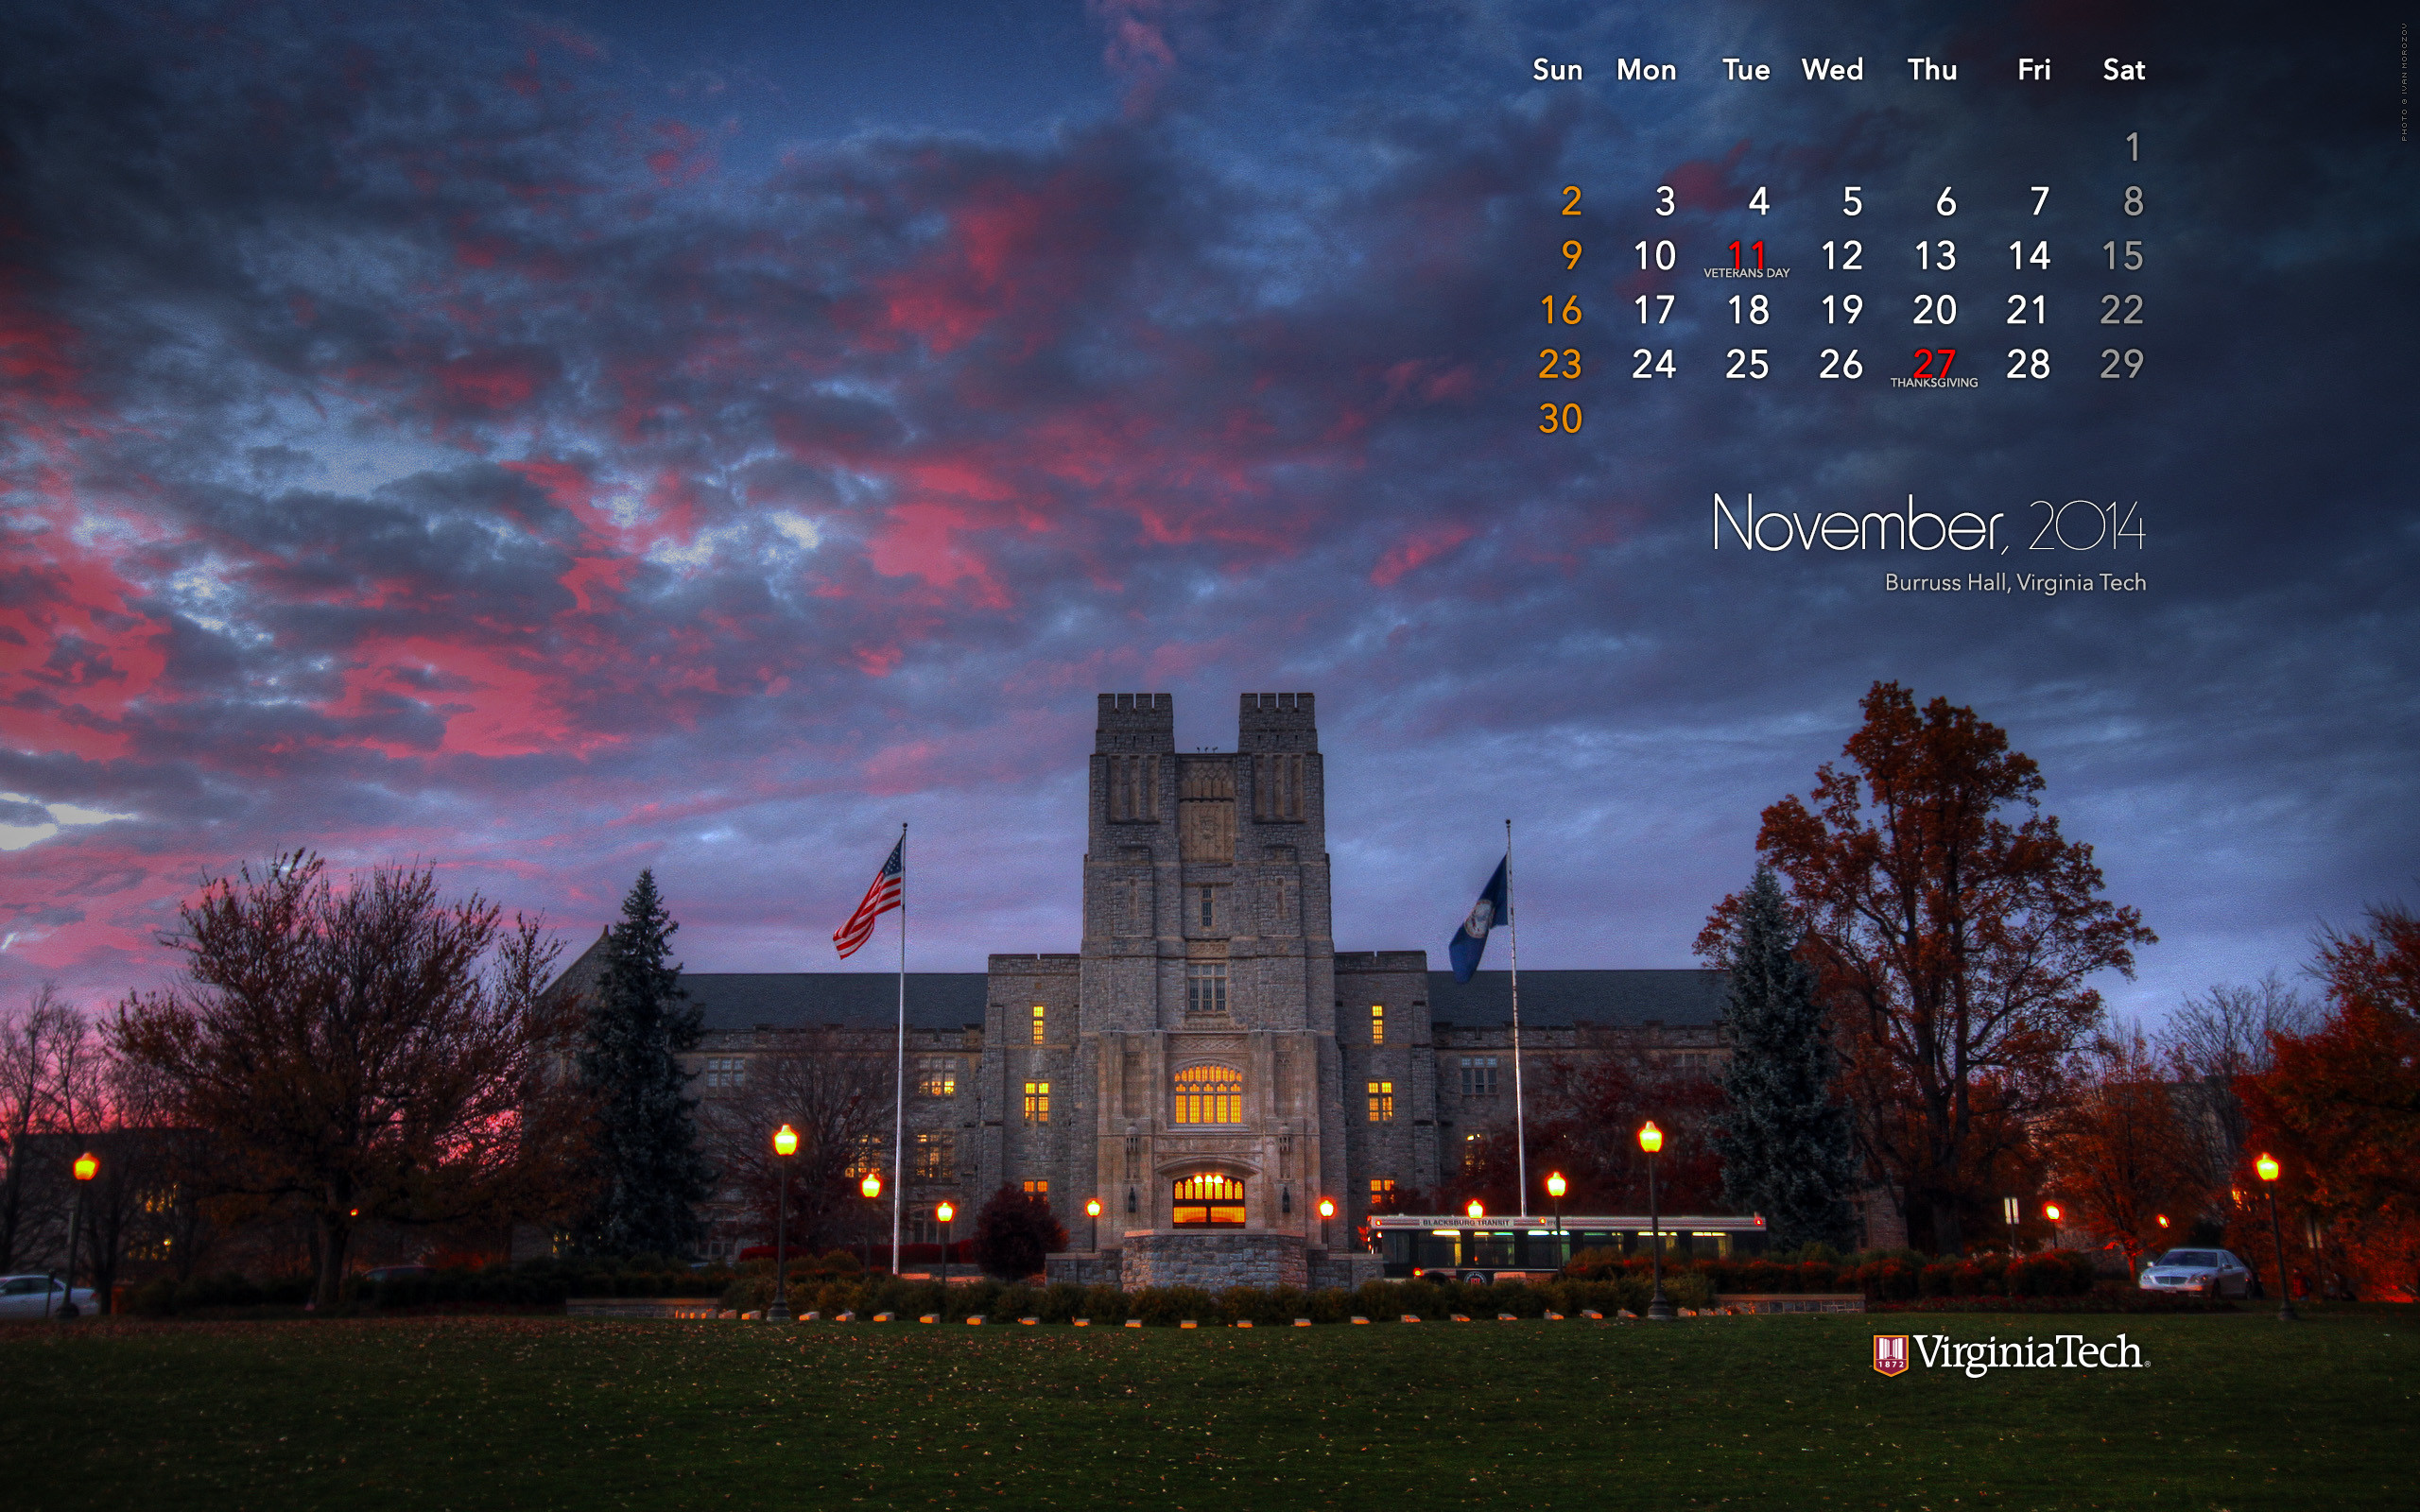 2560x1600 Desktop Wallpaper, November 2014. Virginia Tech. Download: 2560 x 1600 .